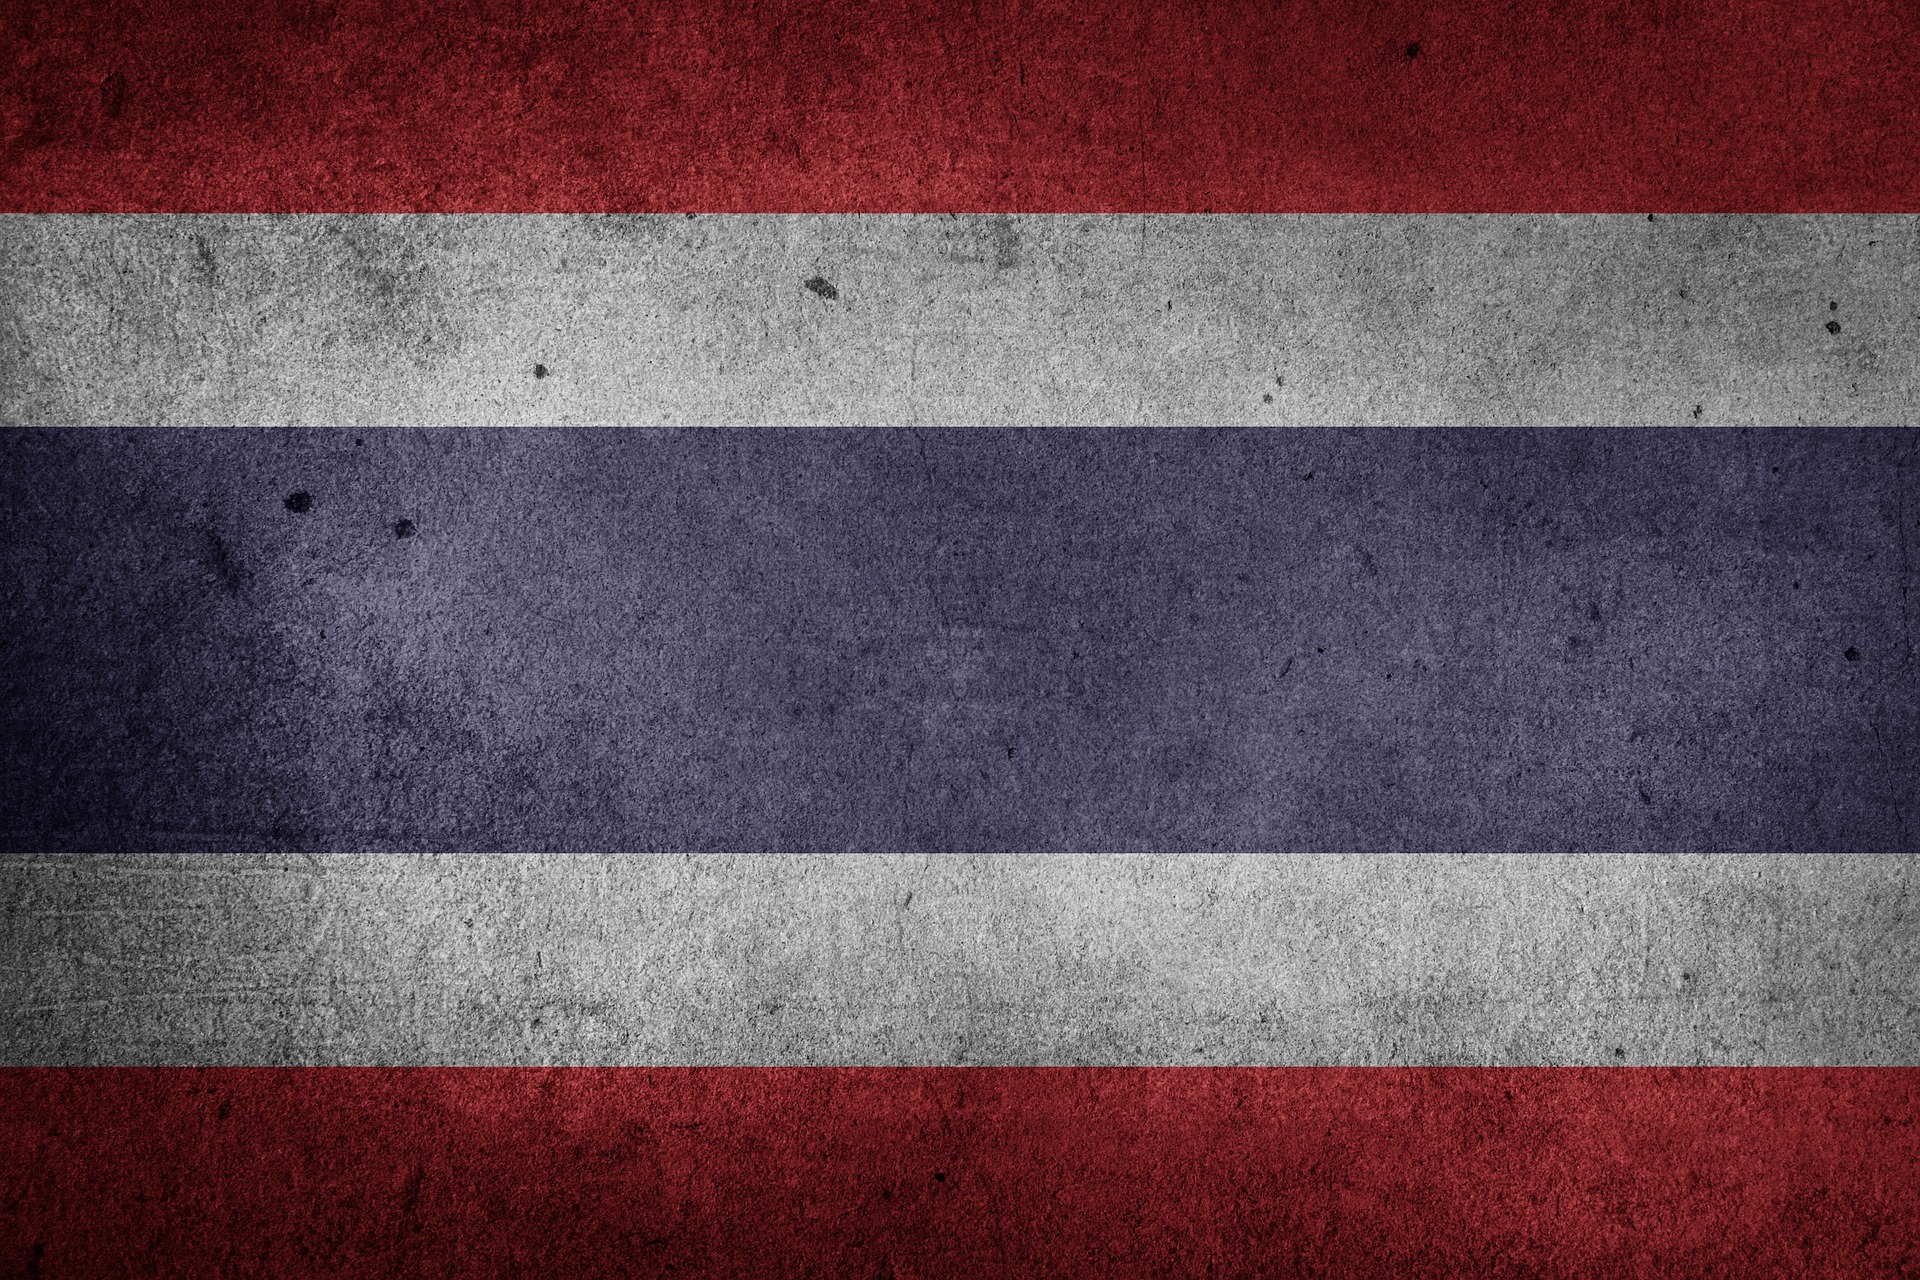 Flag of Thailand (photo credit: pixabay)